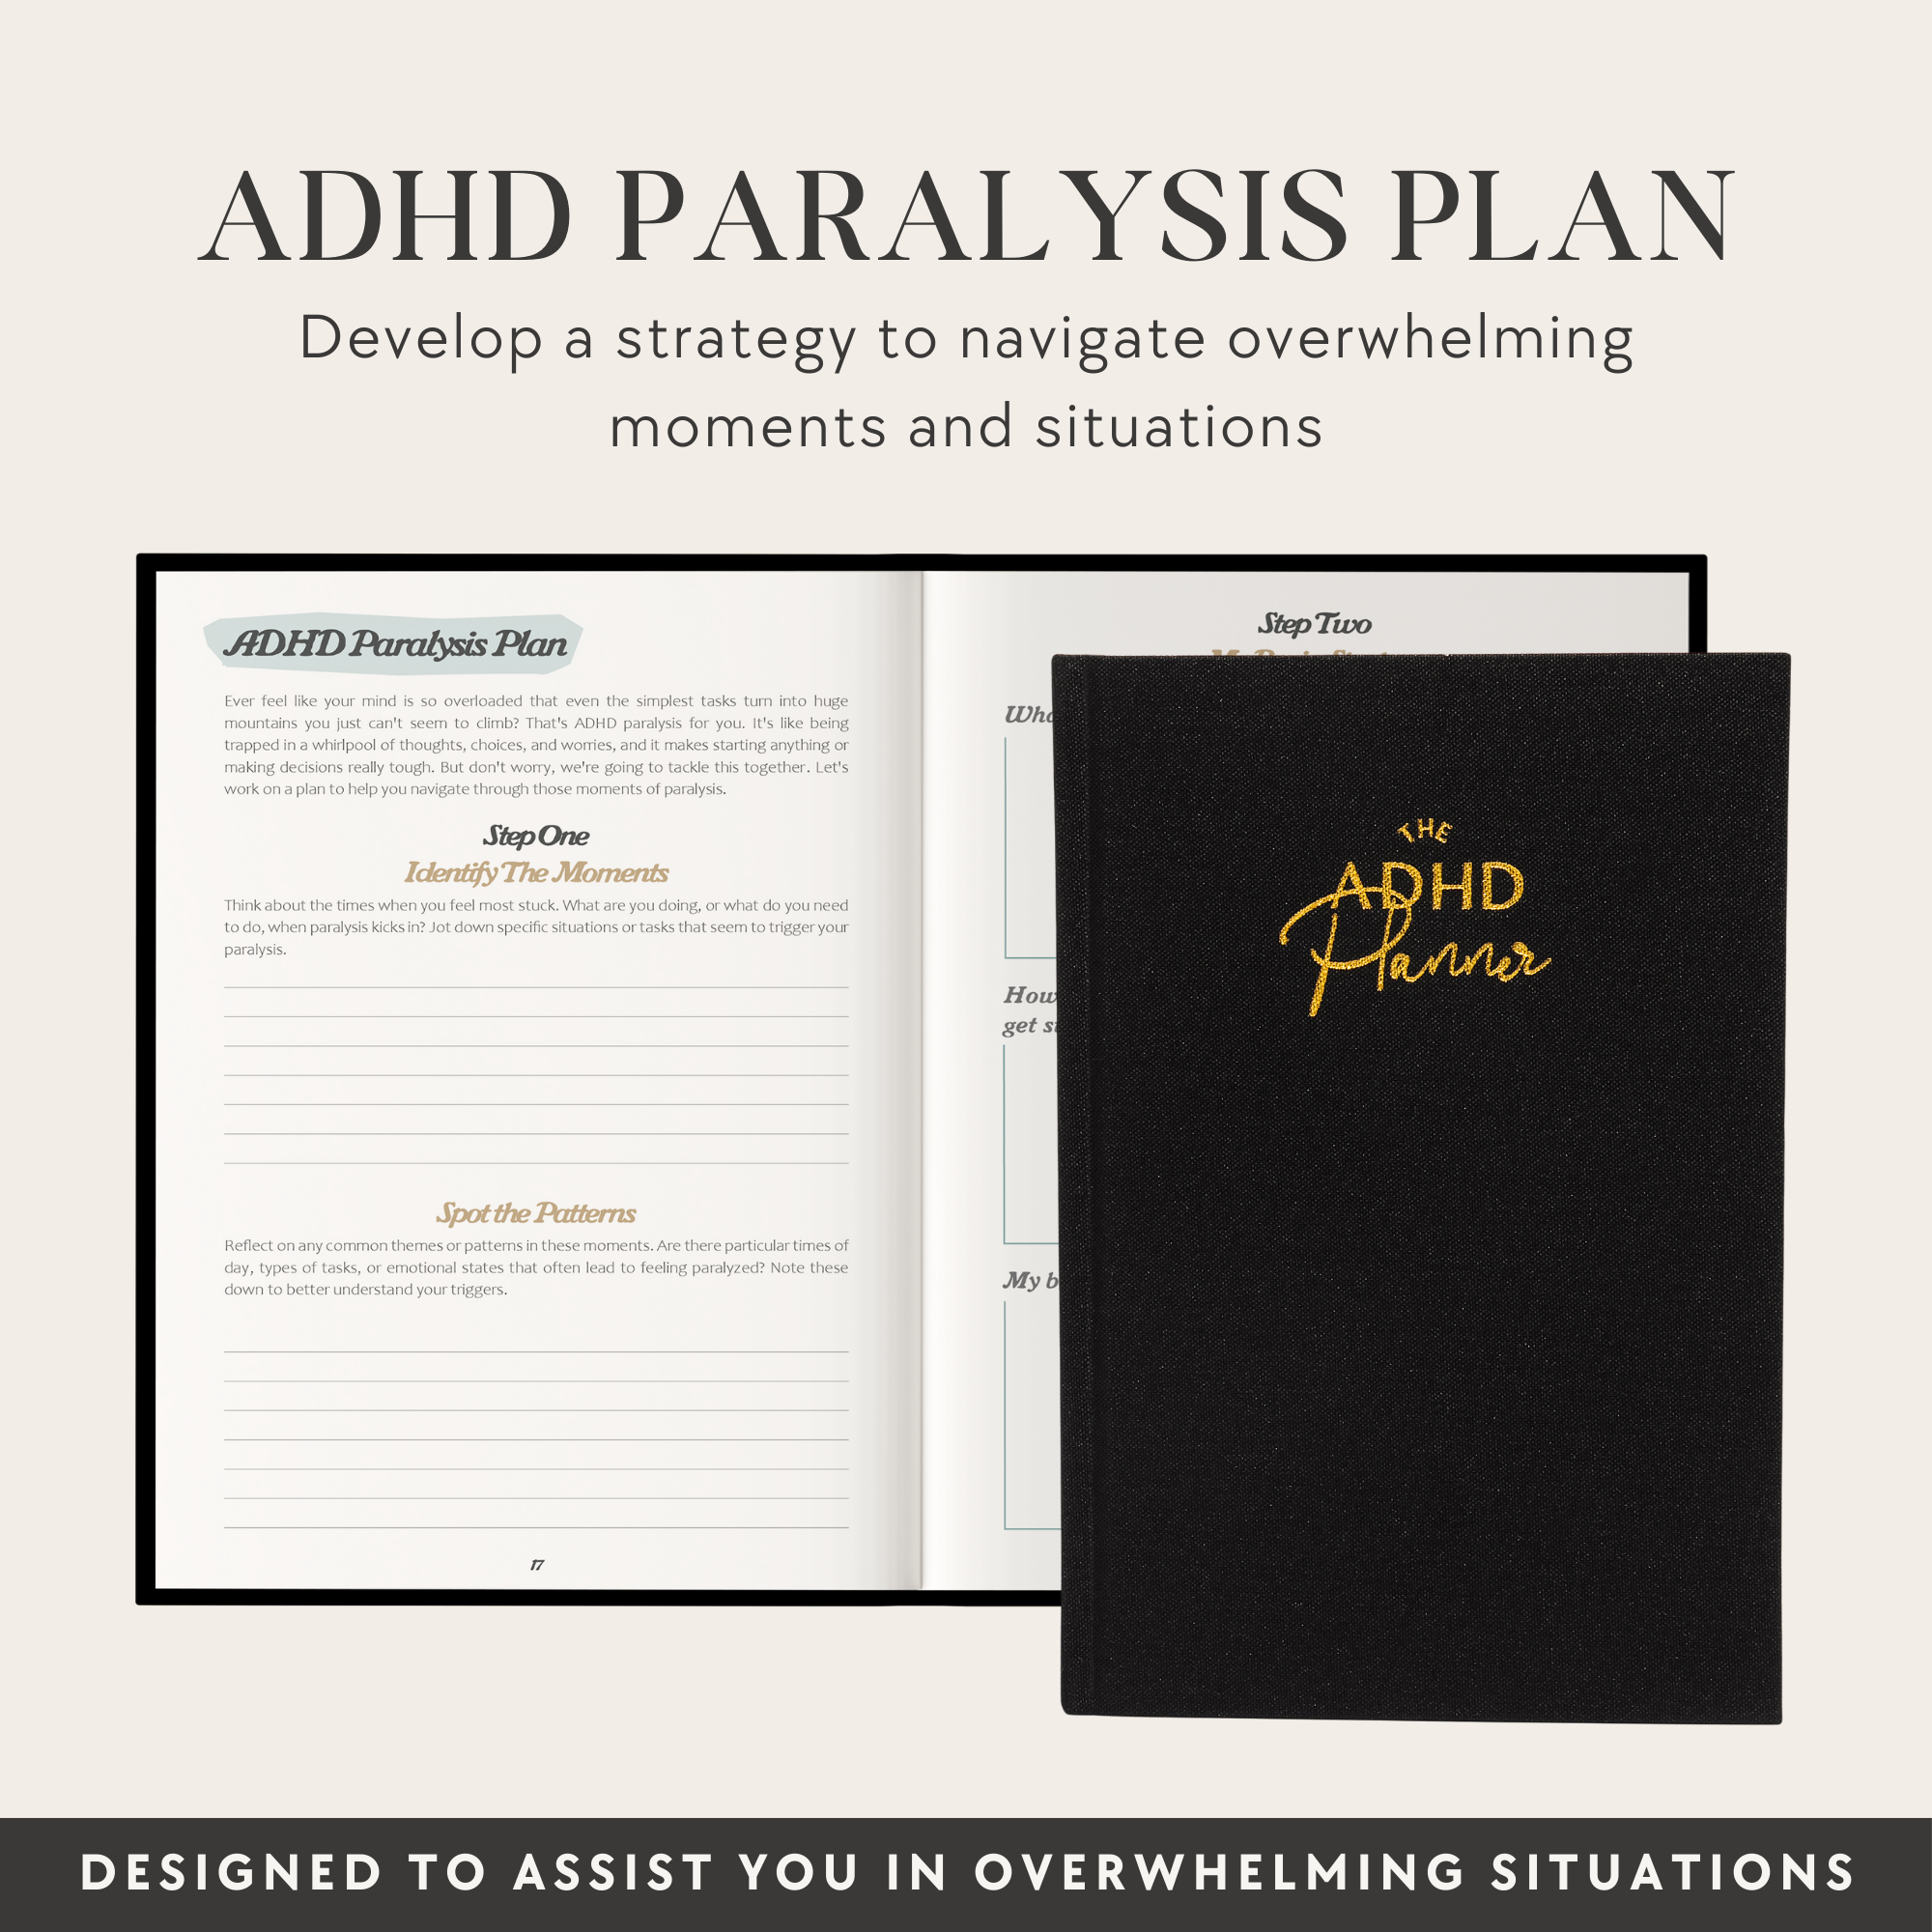 ADHD Planners - Black